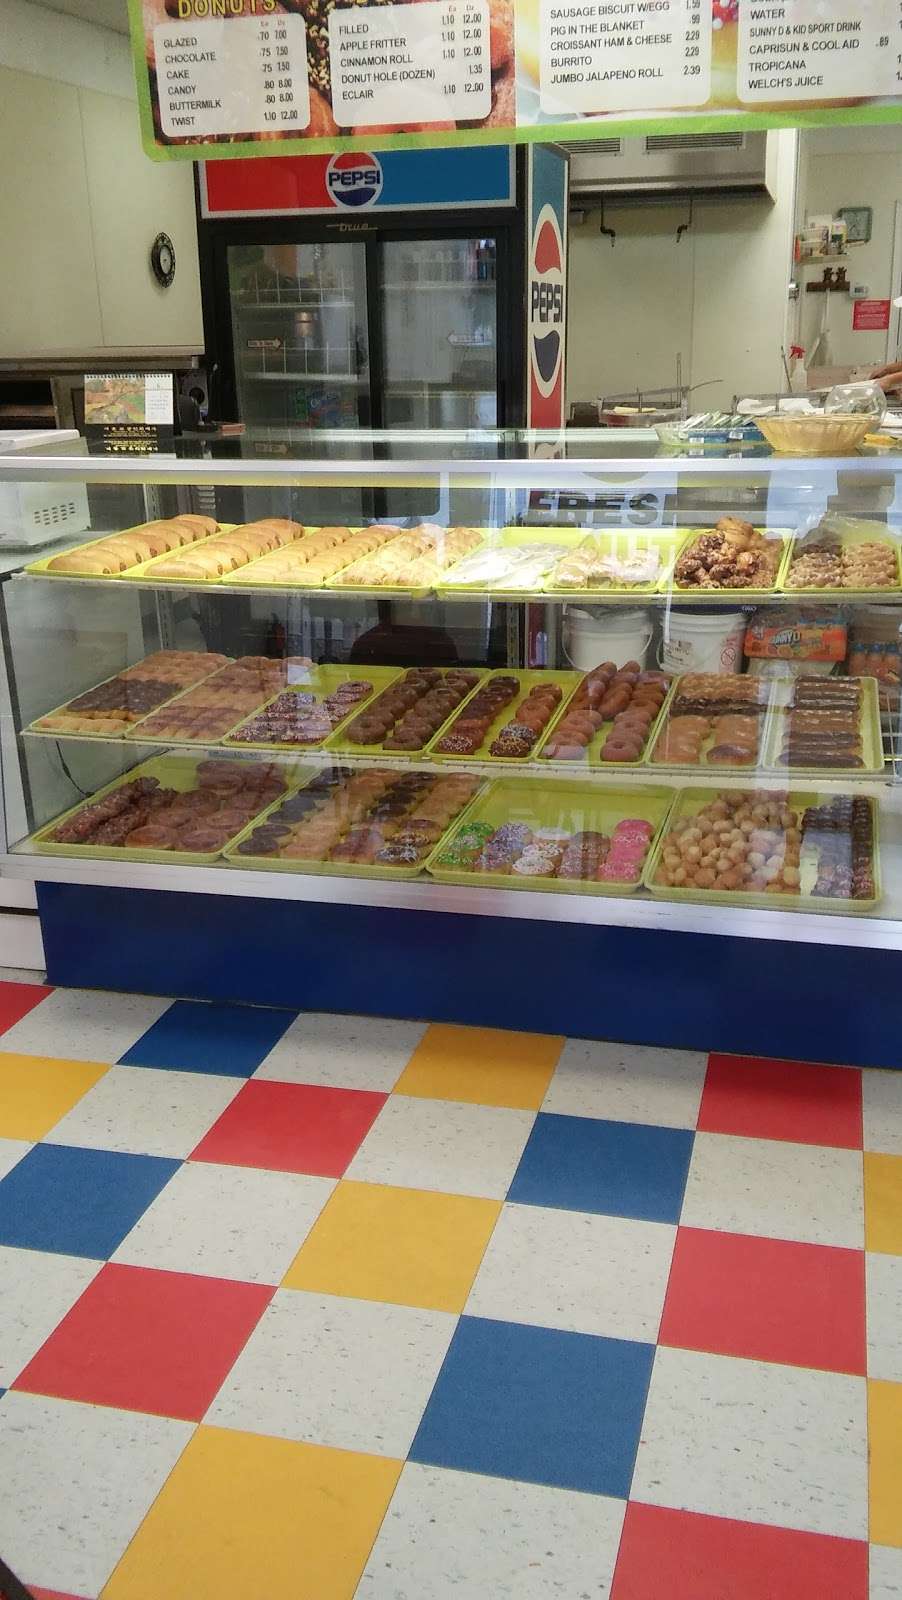 Best Donuts | 307 S Cedar Ridge Dr, Duncanville, TX 75116 | Phone: (972) 780-2636